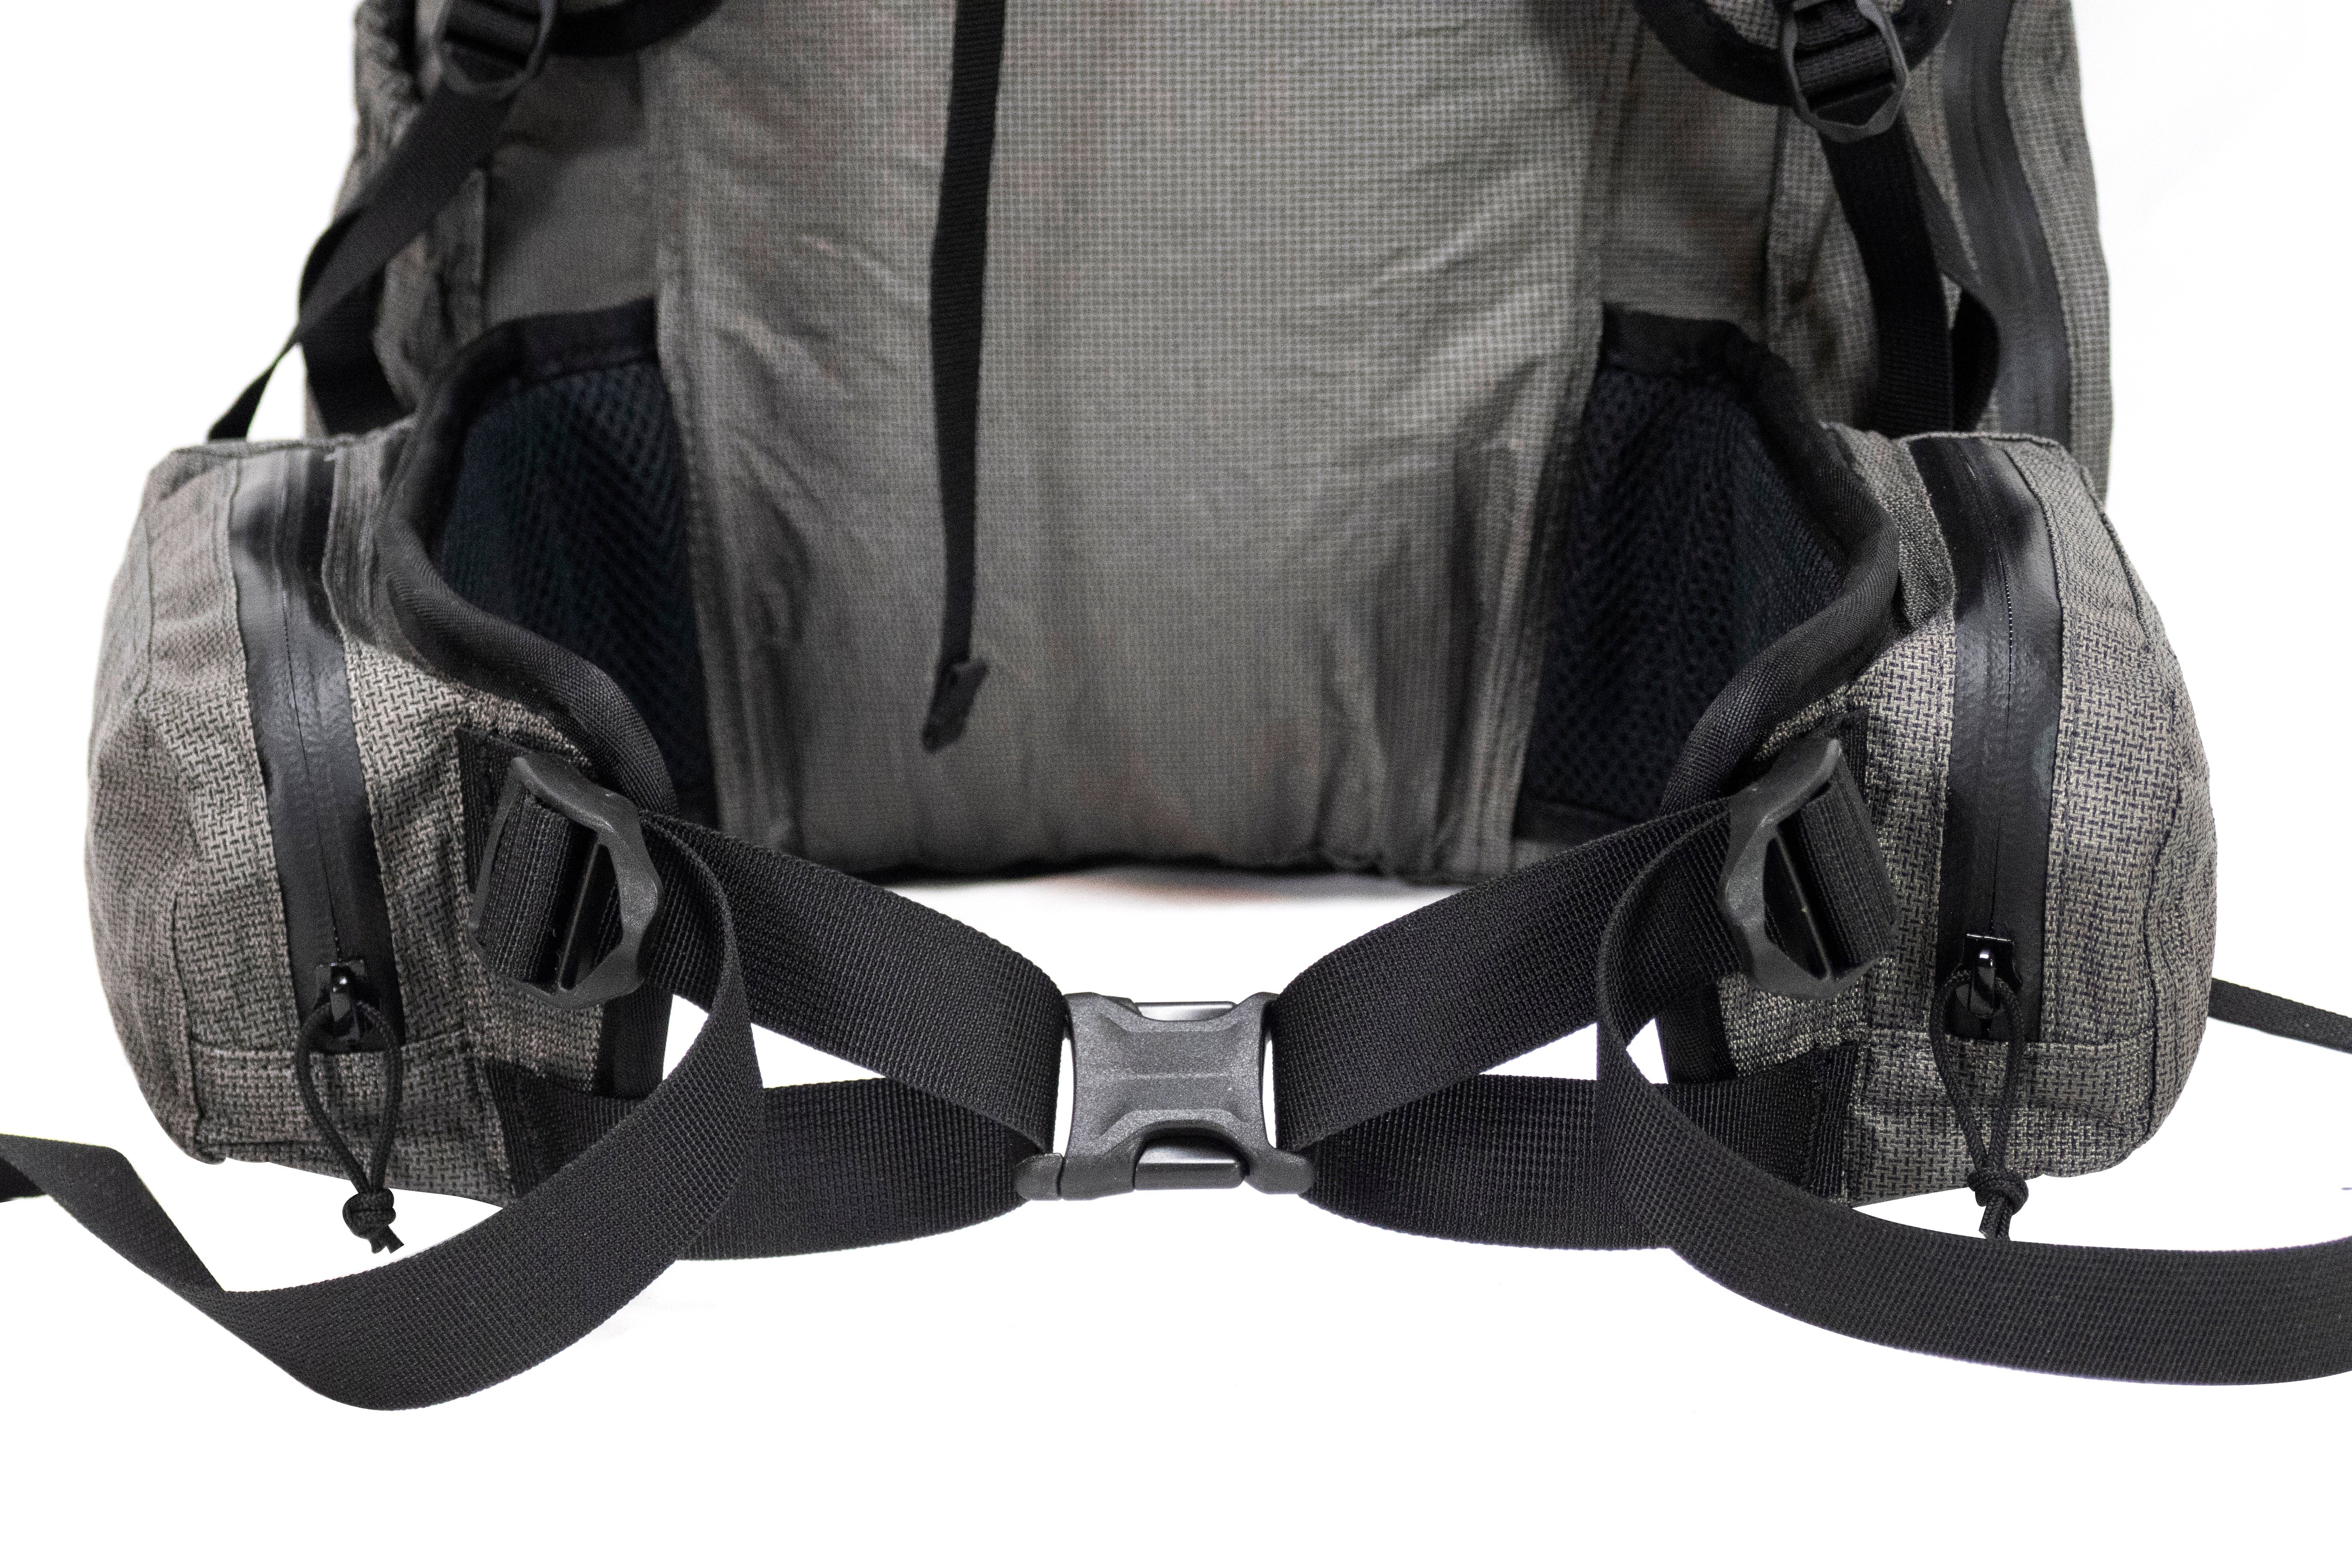 Dan Durston Gear Kakwa 40 Ultralight Backpack hipbelt shaped shoulder straps X-mid 2